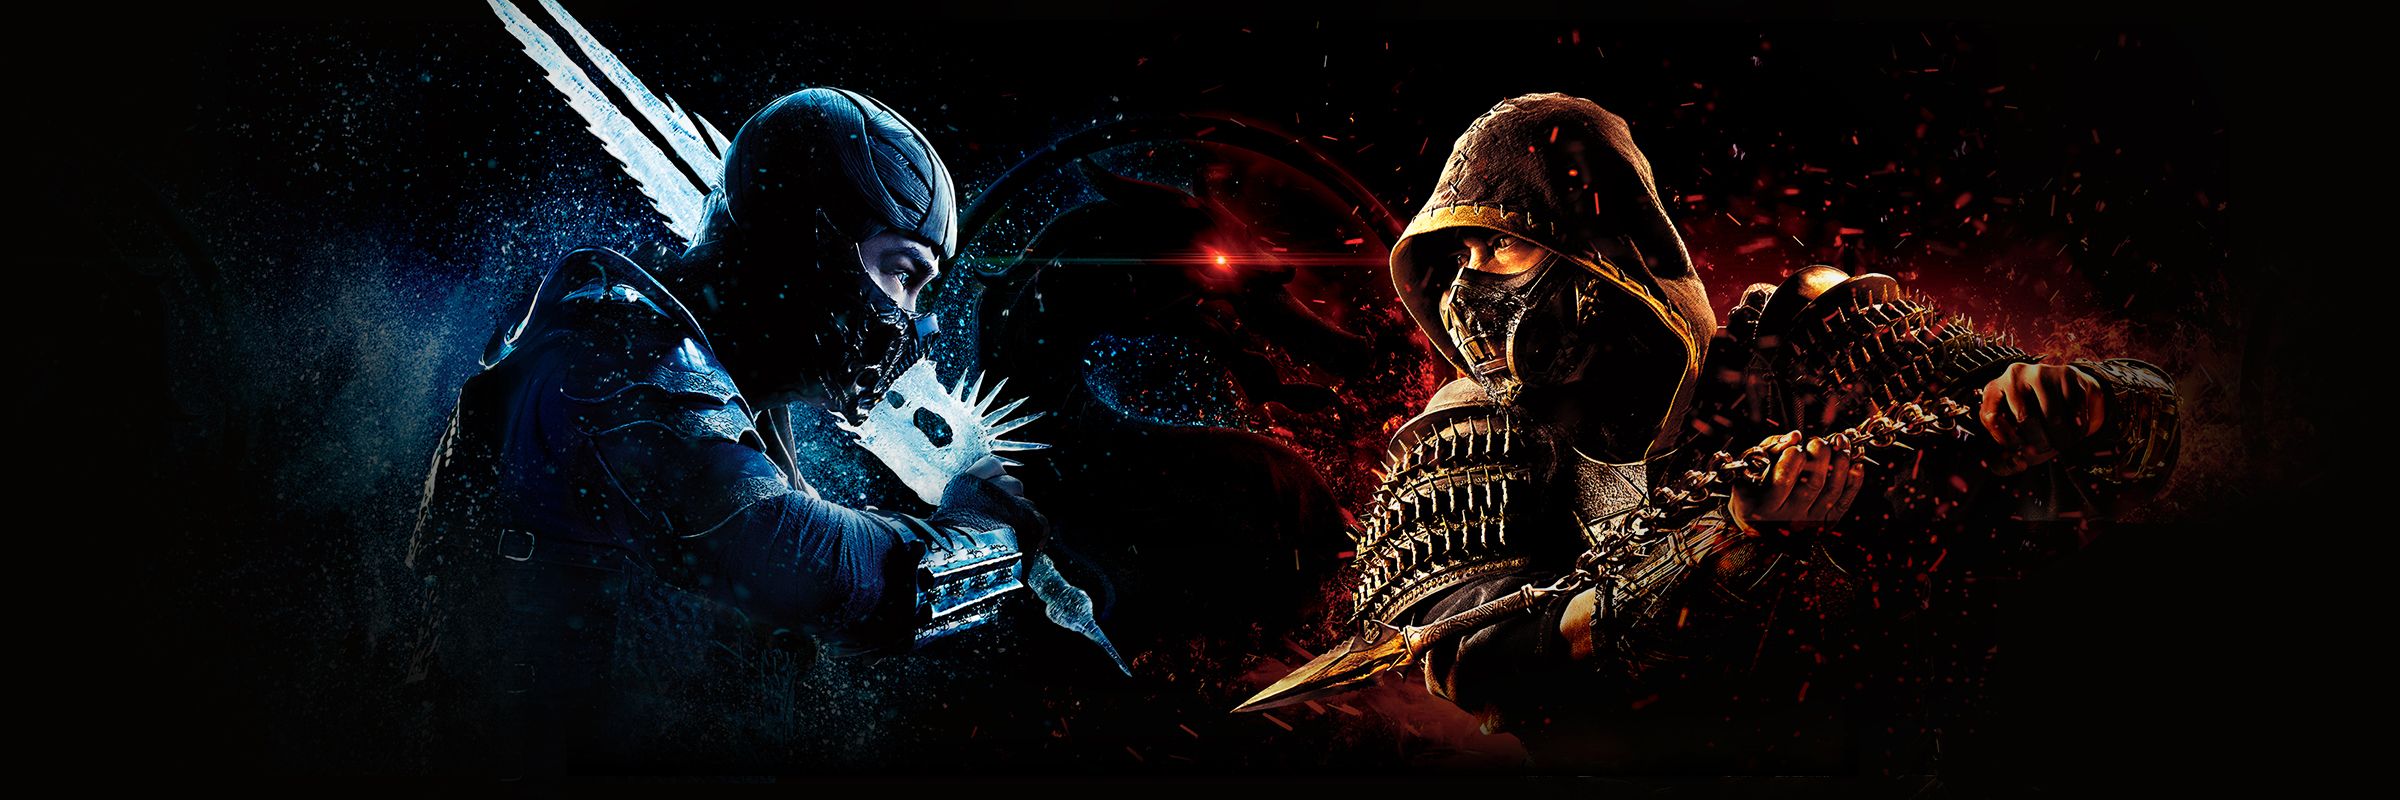 Mortal Kombat (2021) UHD Review • Home Theater Forum